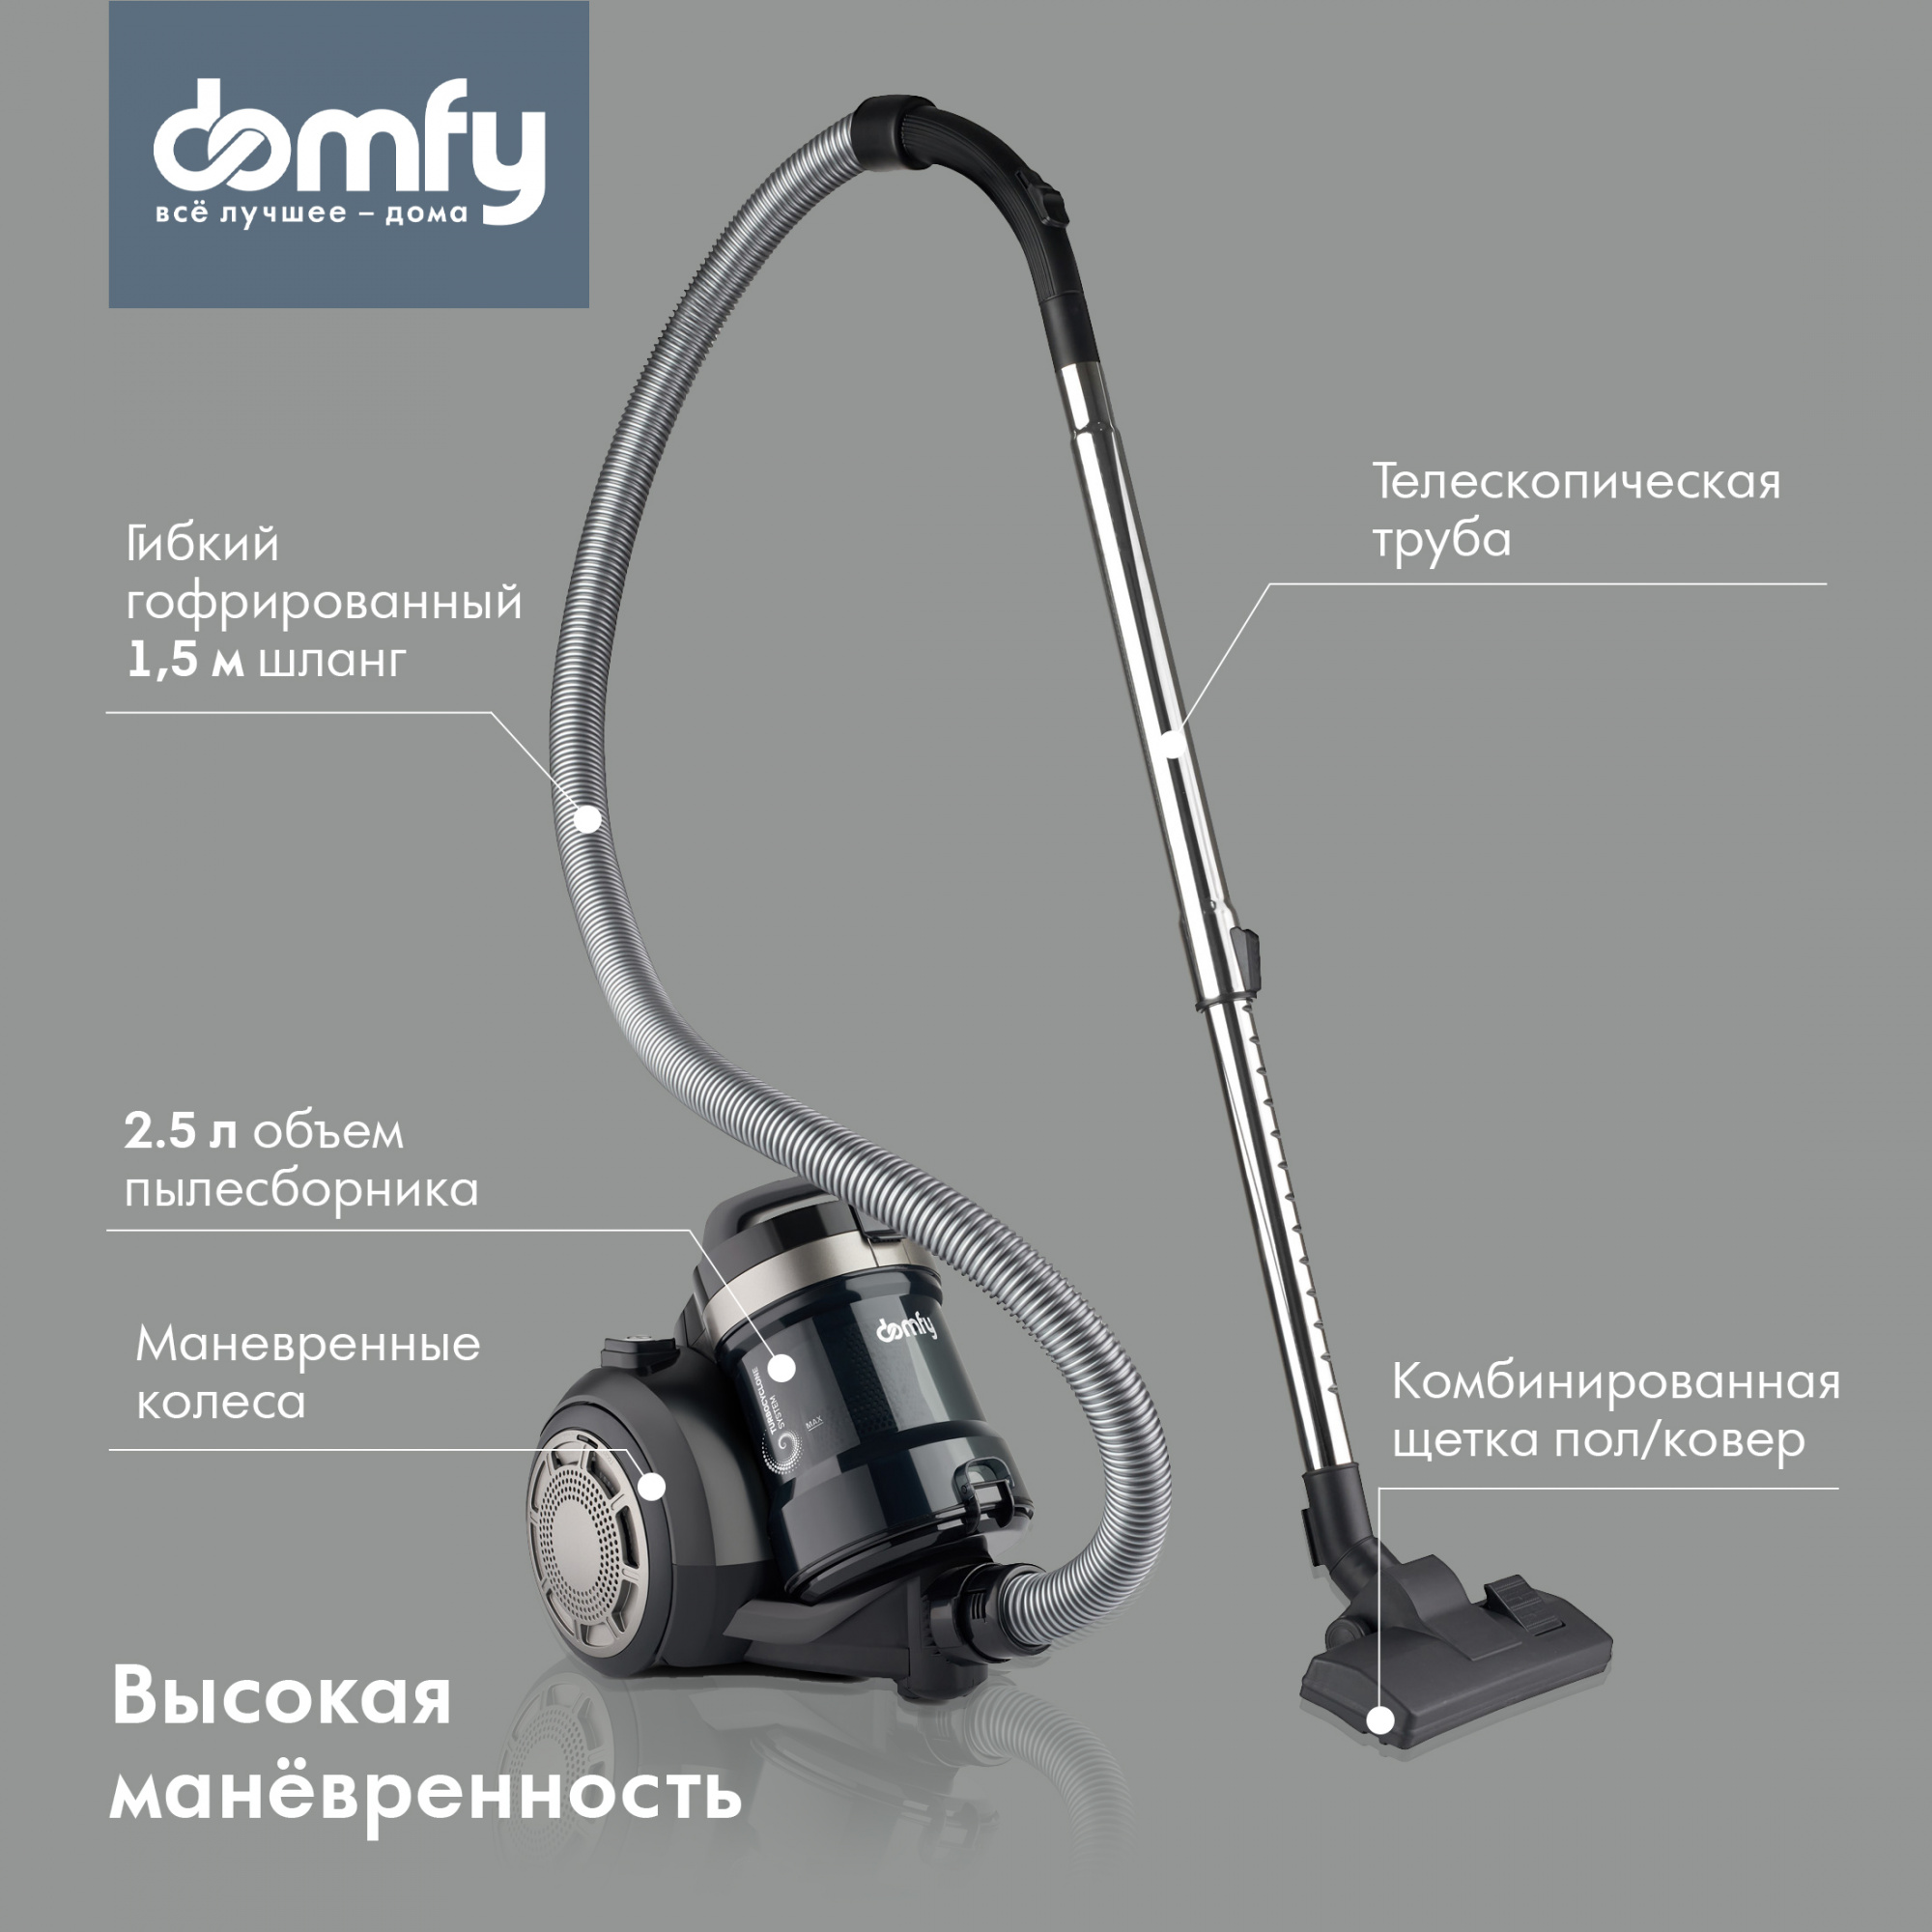 Domfy DSB-VC502